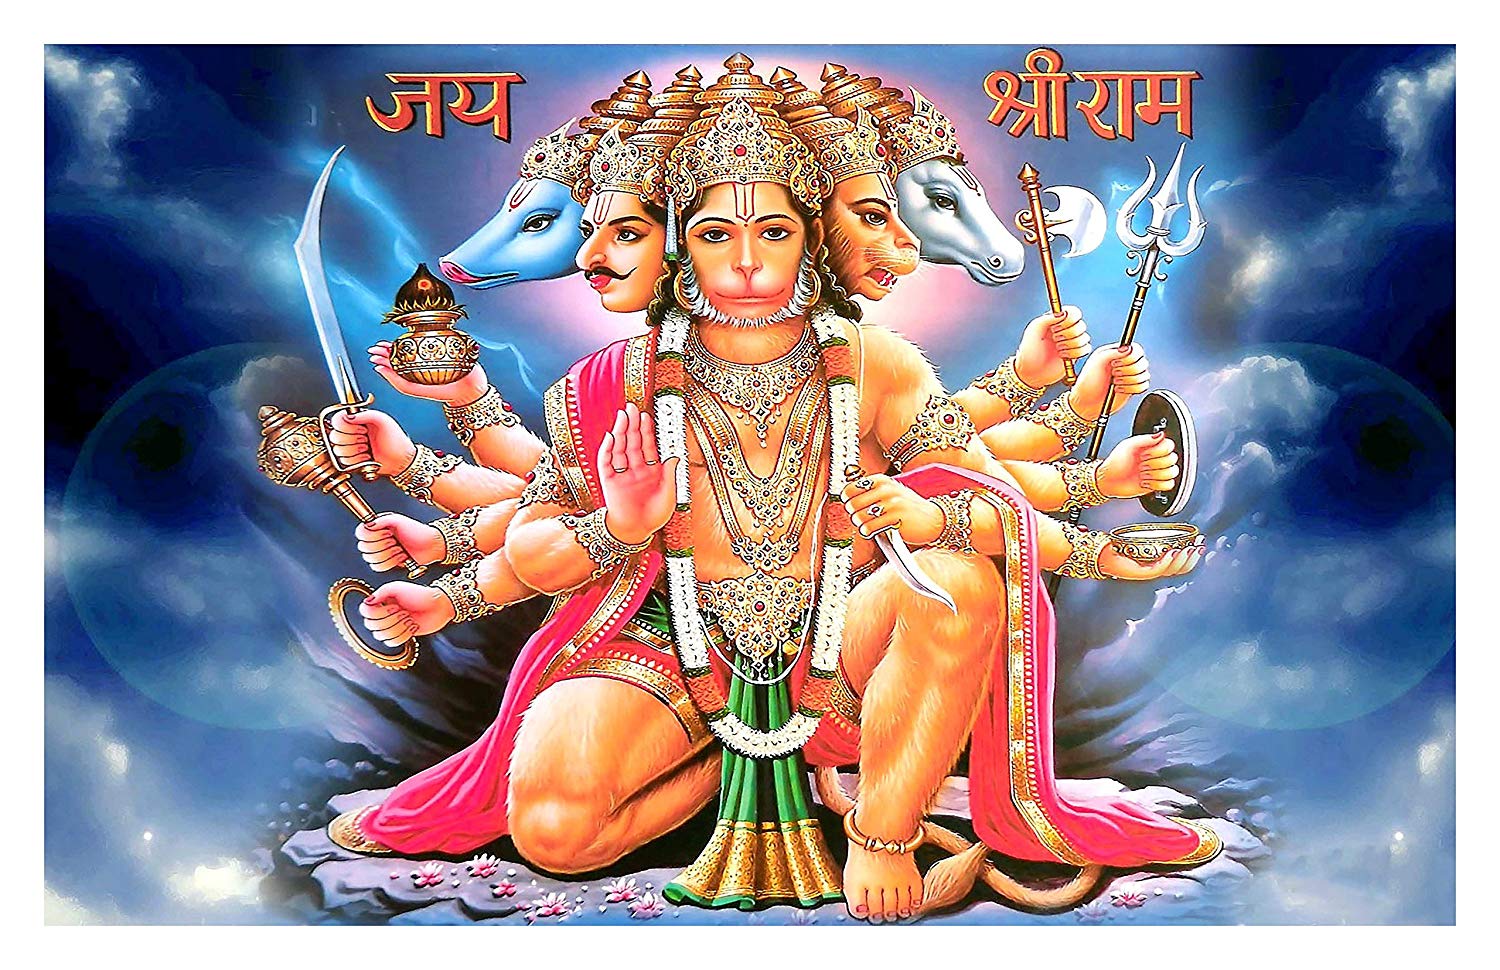 Tuesday Hanuman Ji - 1500x970 Wallpaper 